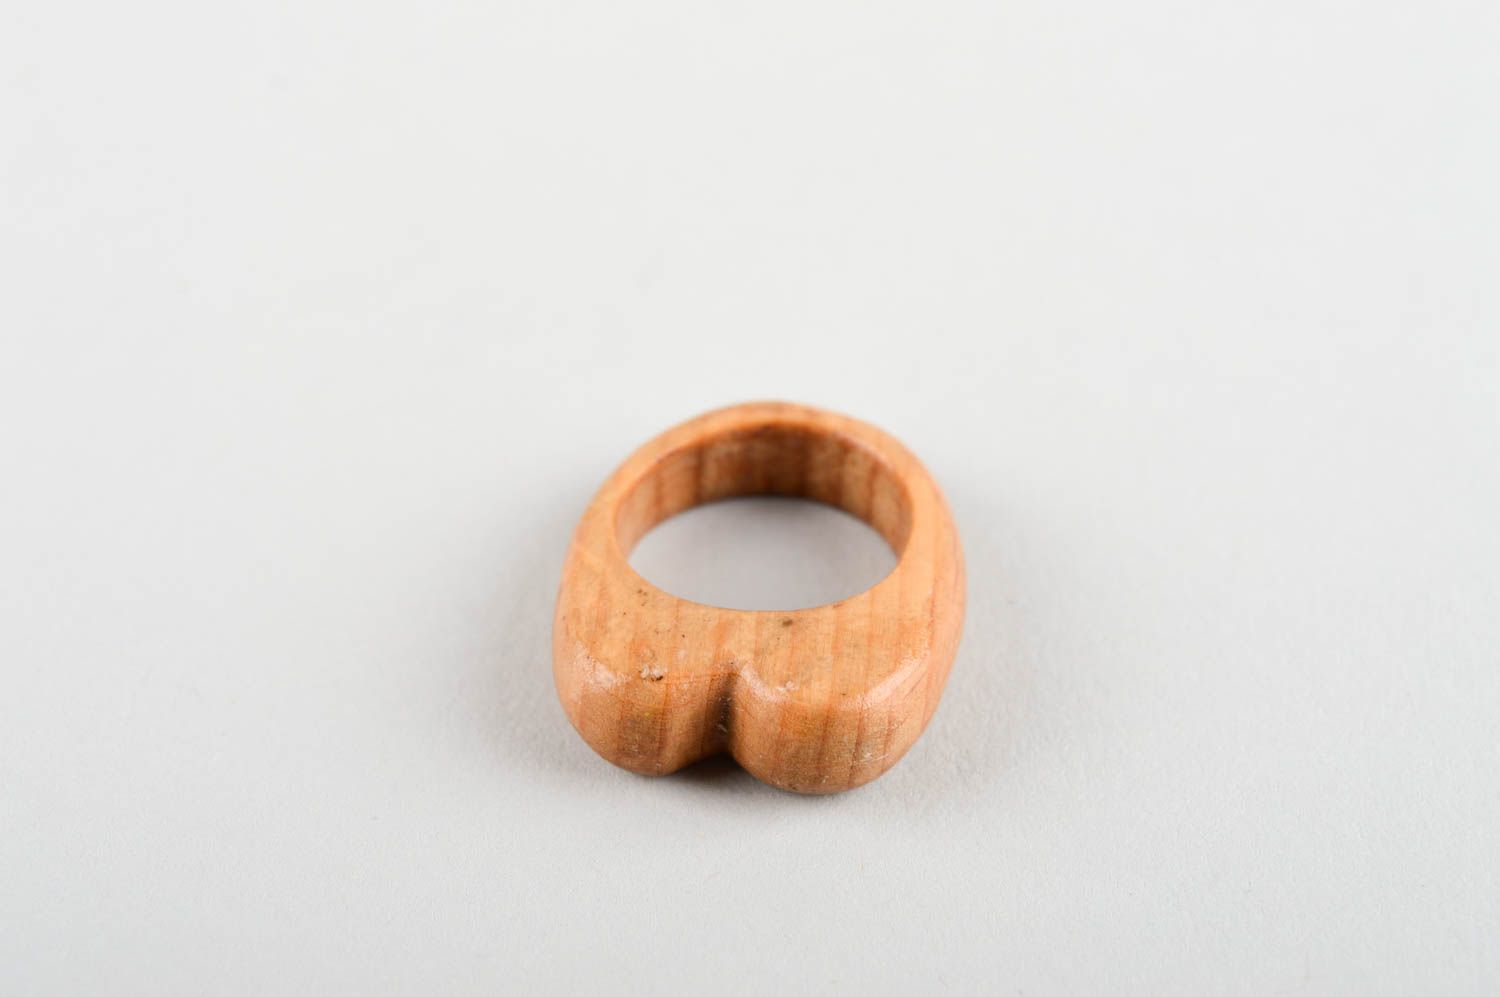 Cute handmade wooden ring wooden jewelry artisan jewelry designs wood craft photo 2